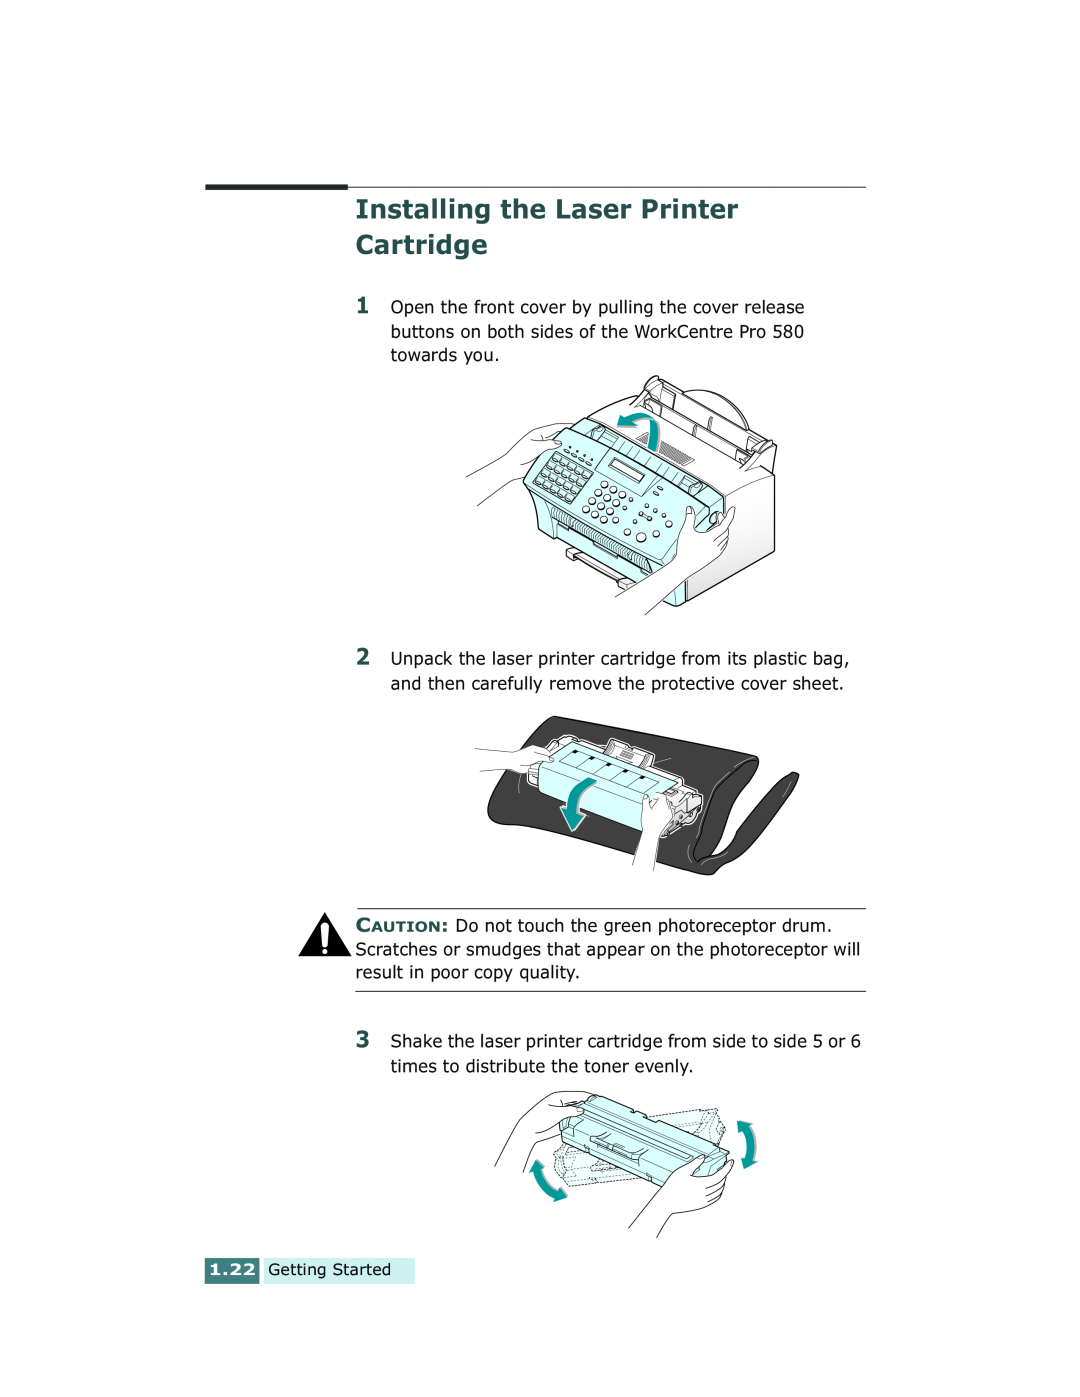 Xerox Pro 580 manual Installing the Laser Printer Cartridge, Getting Started 